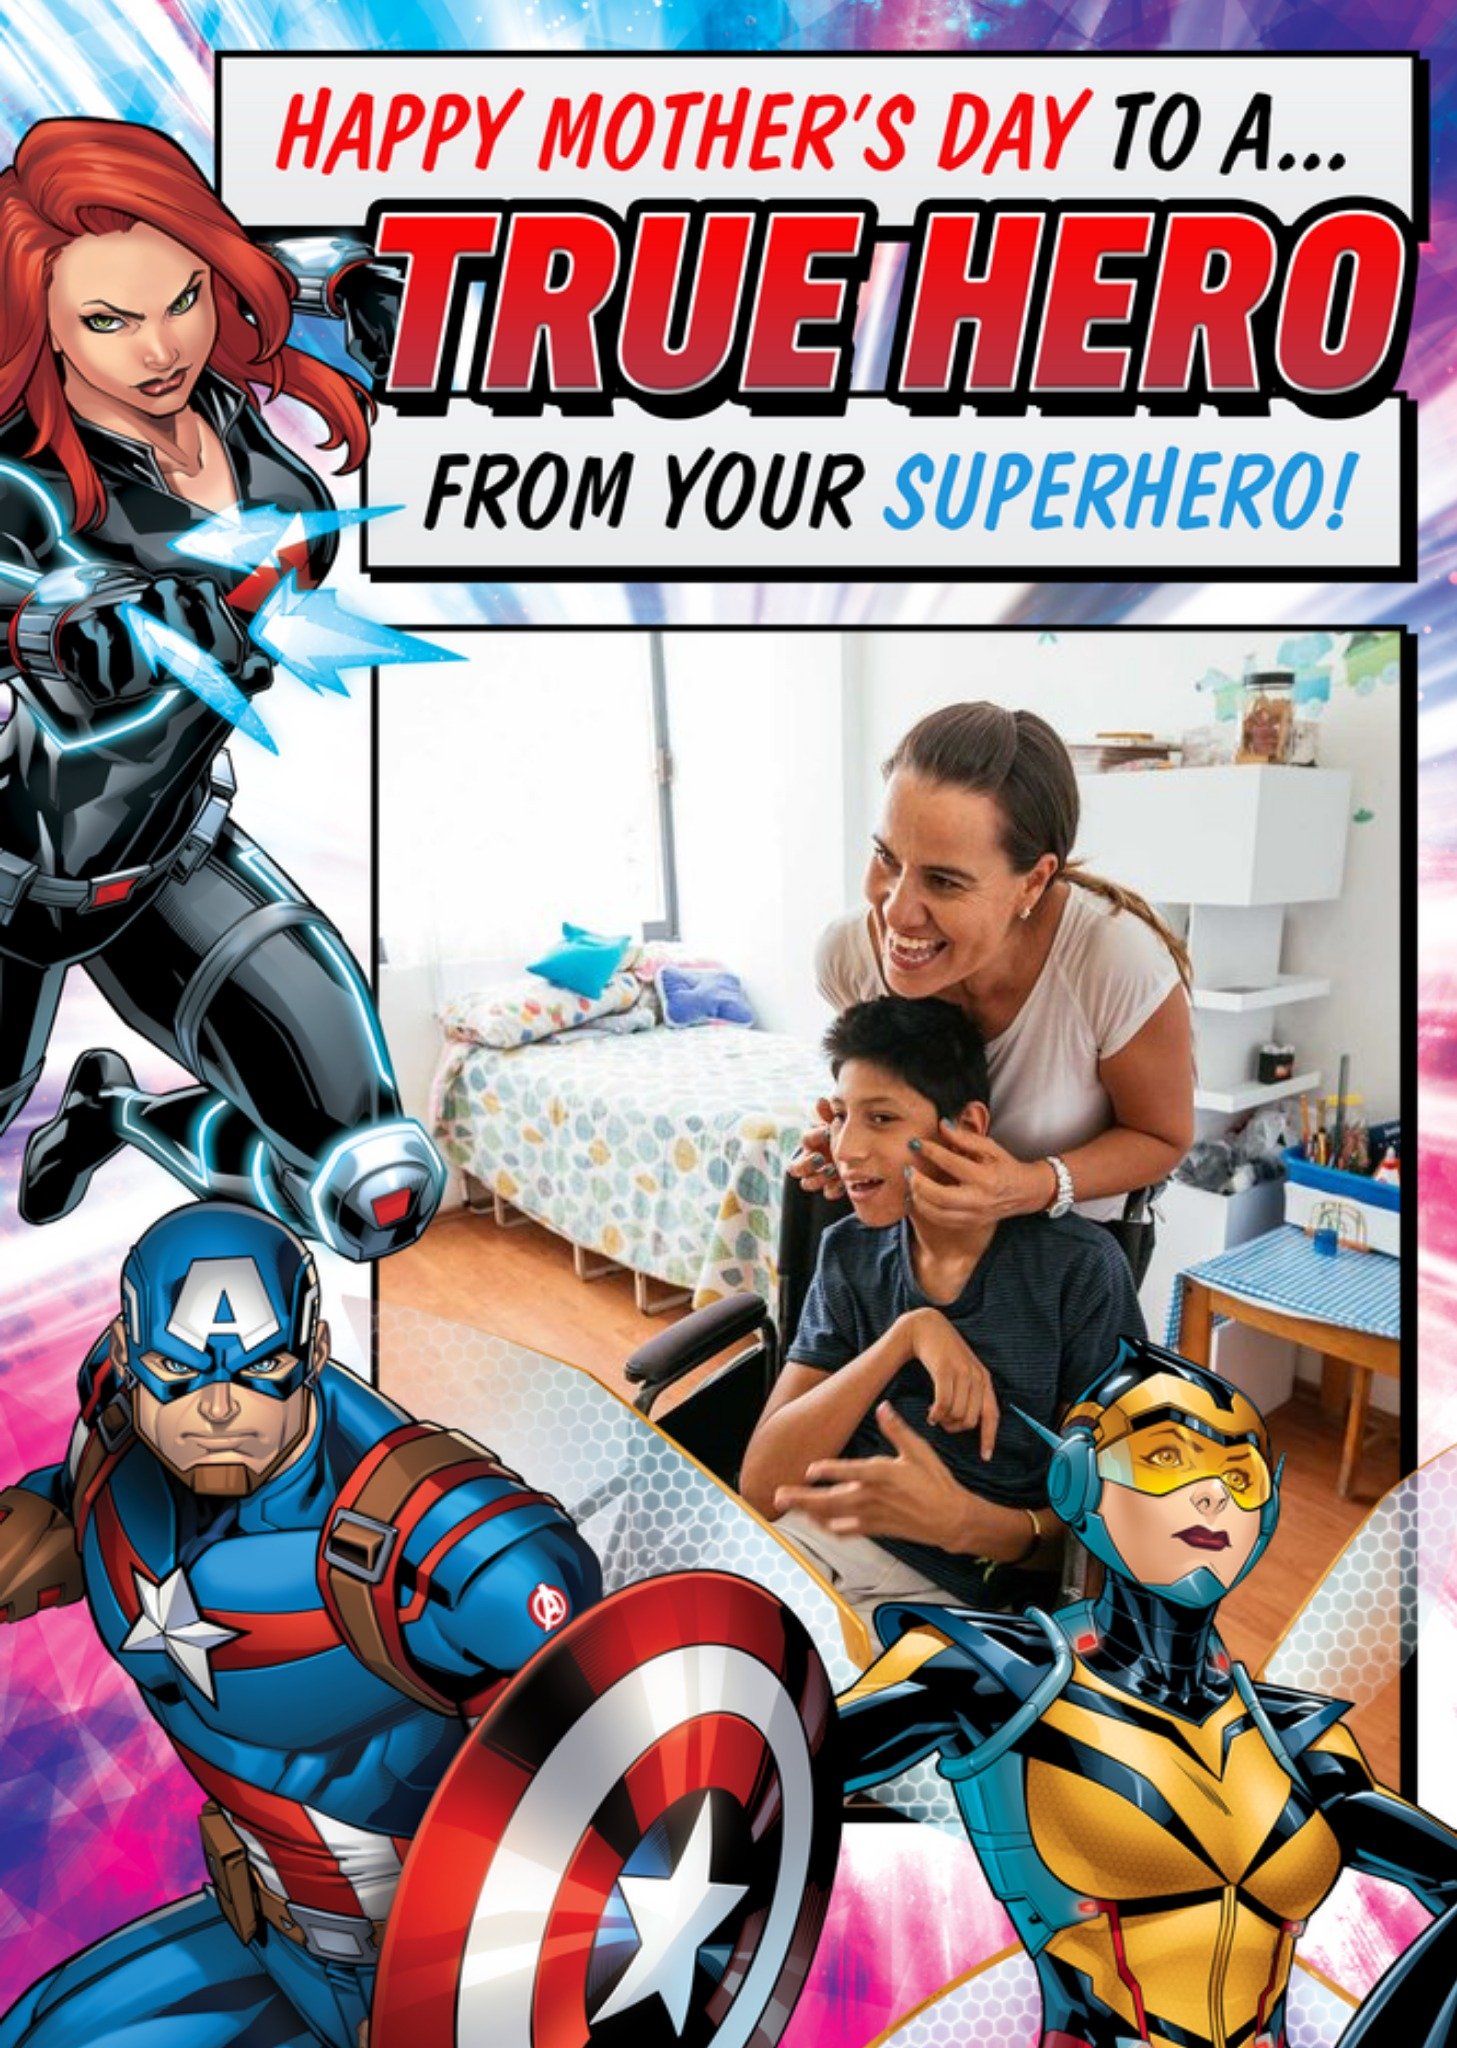 The Avengers True Hero Avengers Photo Upload Mother's Day Card Ecard